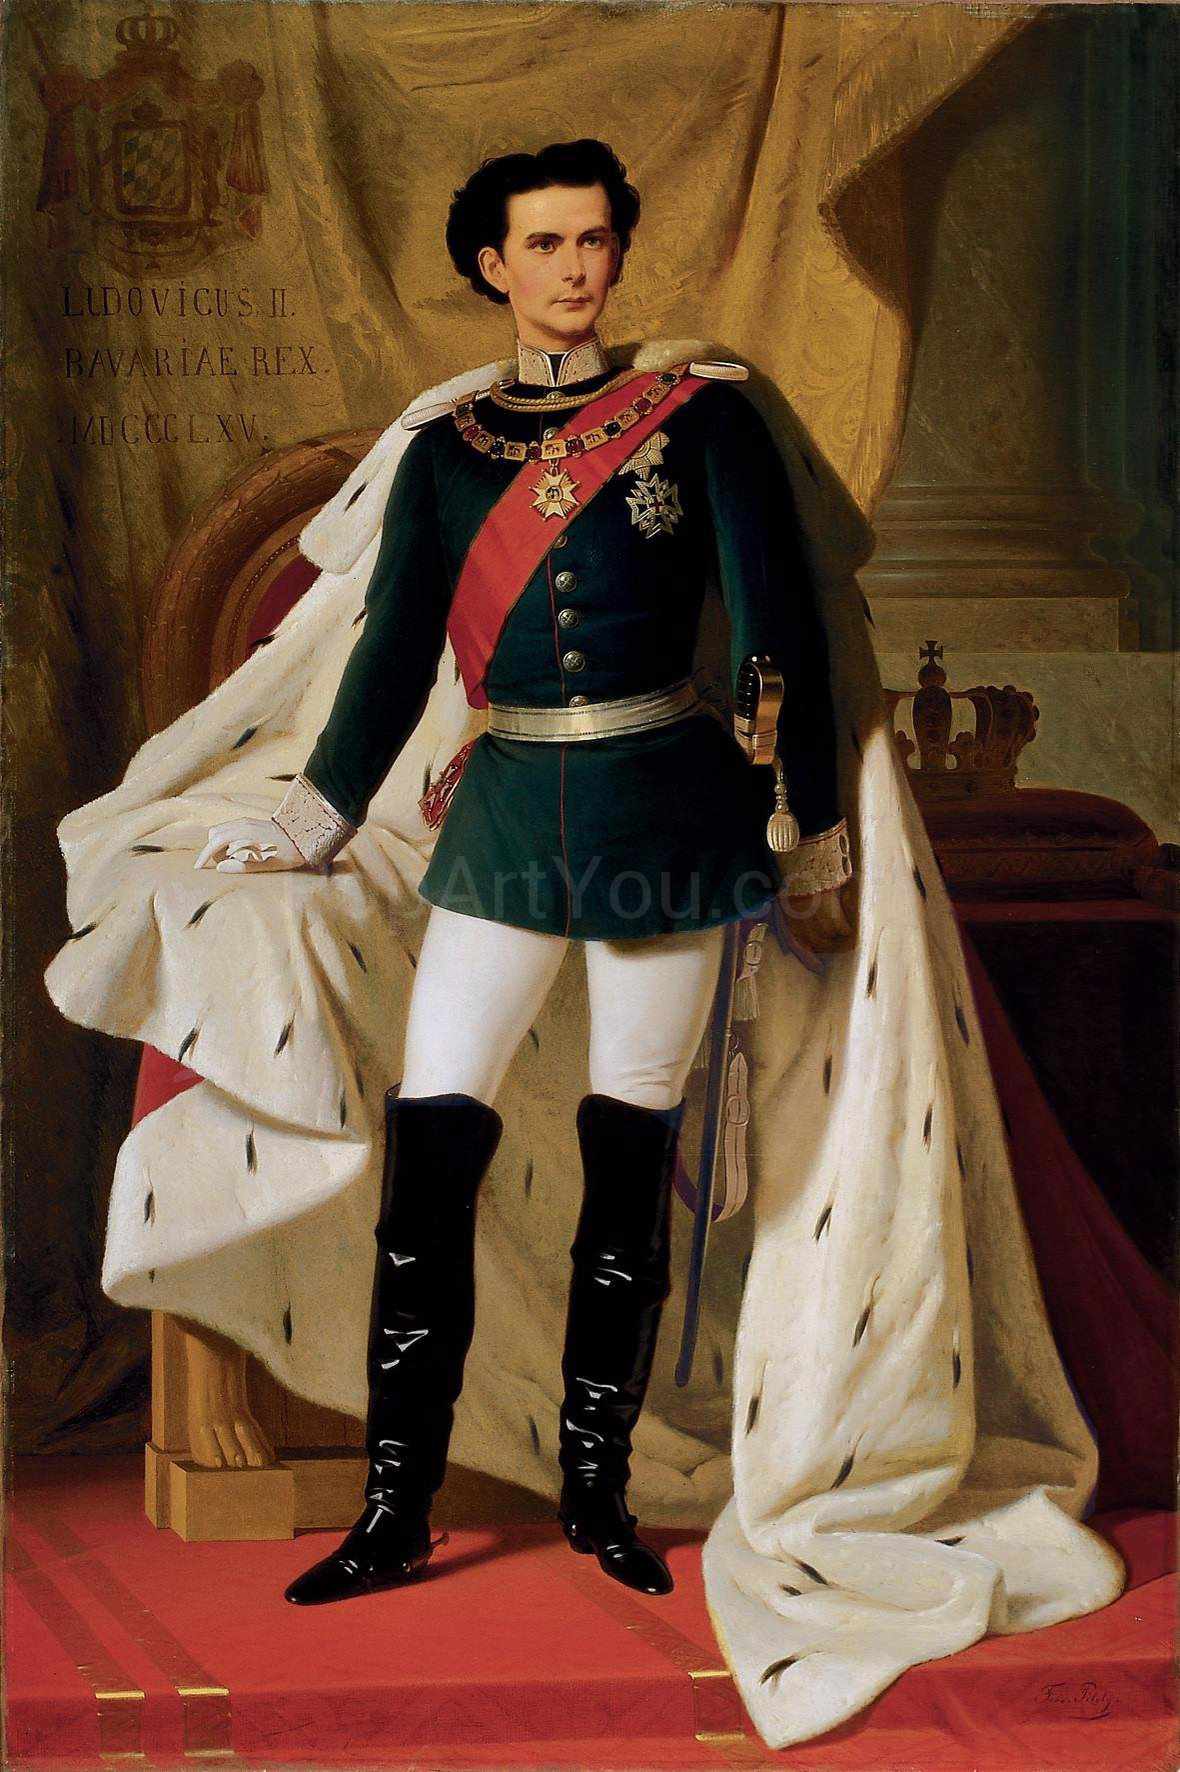 The portrait shows a man dressed in a historical Ferdinand von Piloty costume